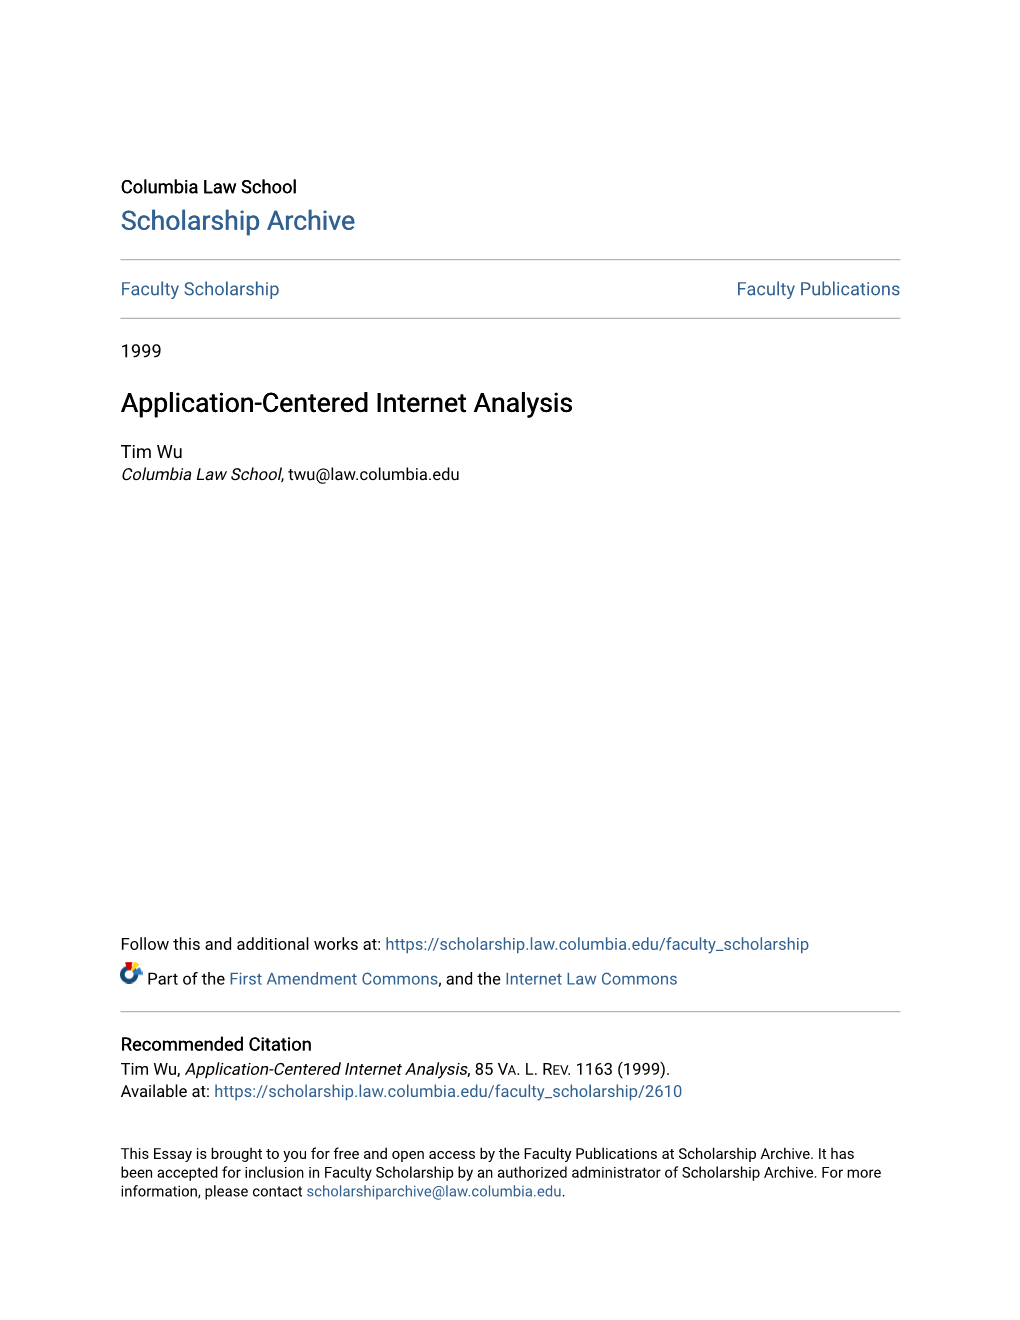 Application-Centered Internet Analysis